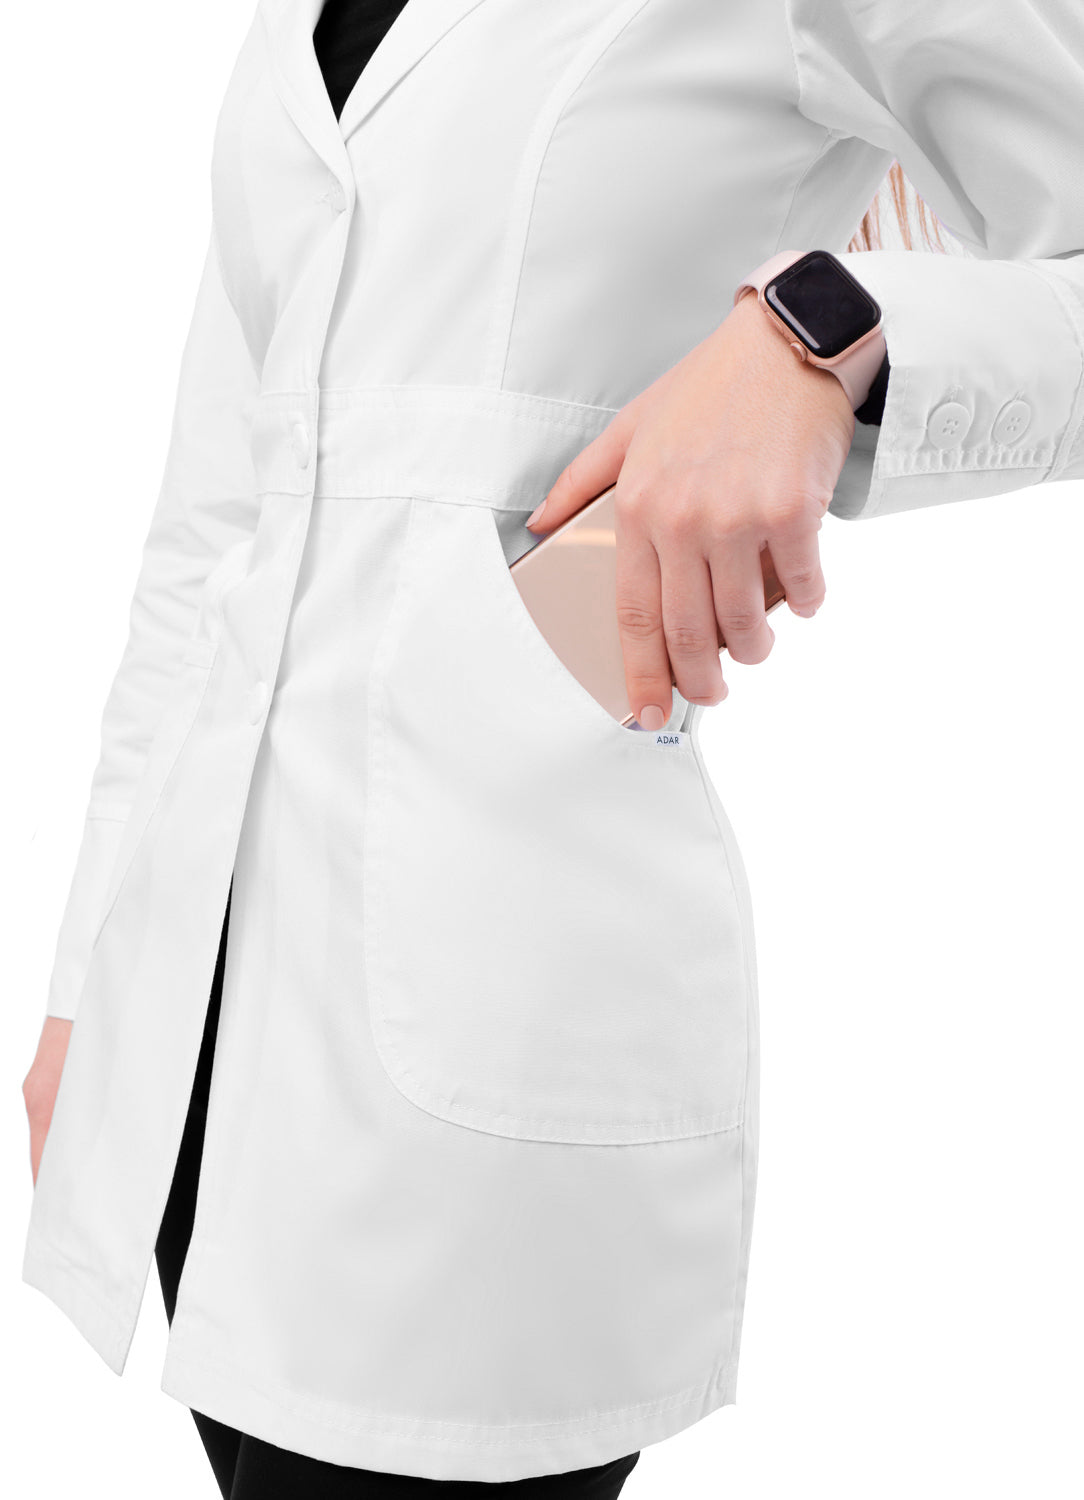 Adar Universal Women's 32" Perfection Lab coat